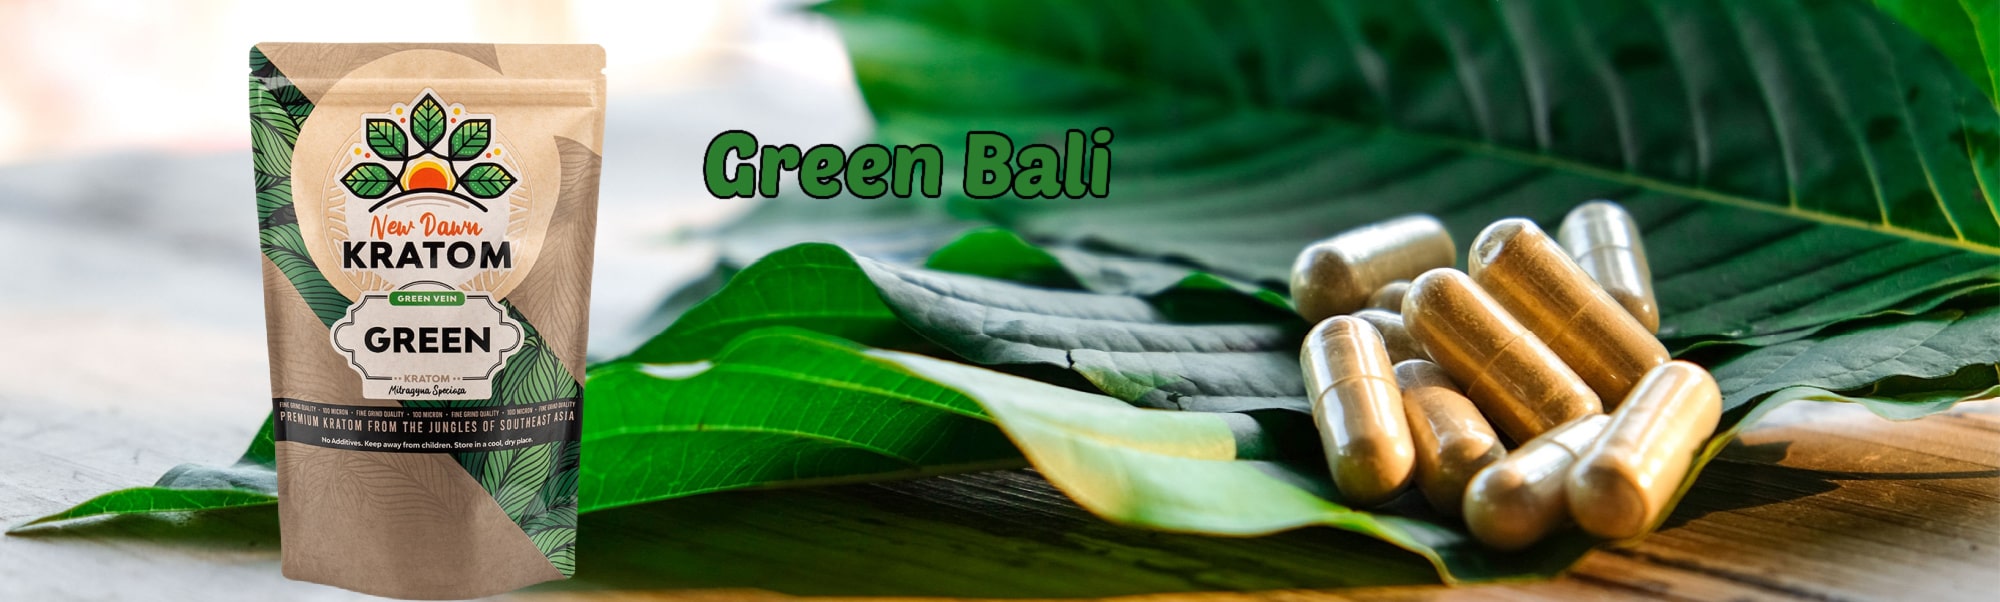 image of green bali strain for energy